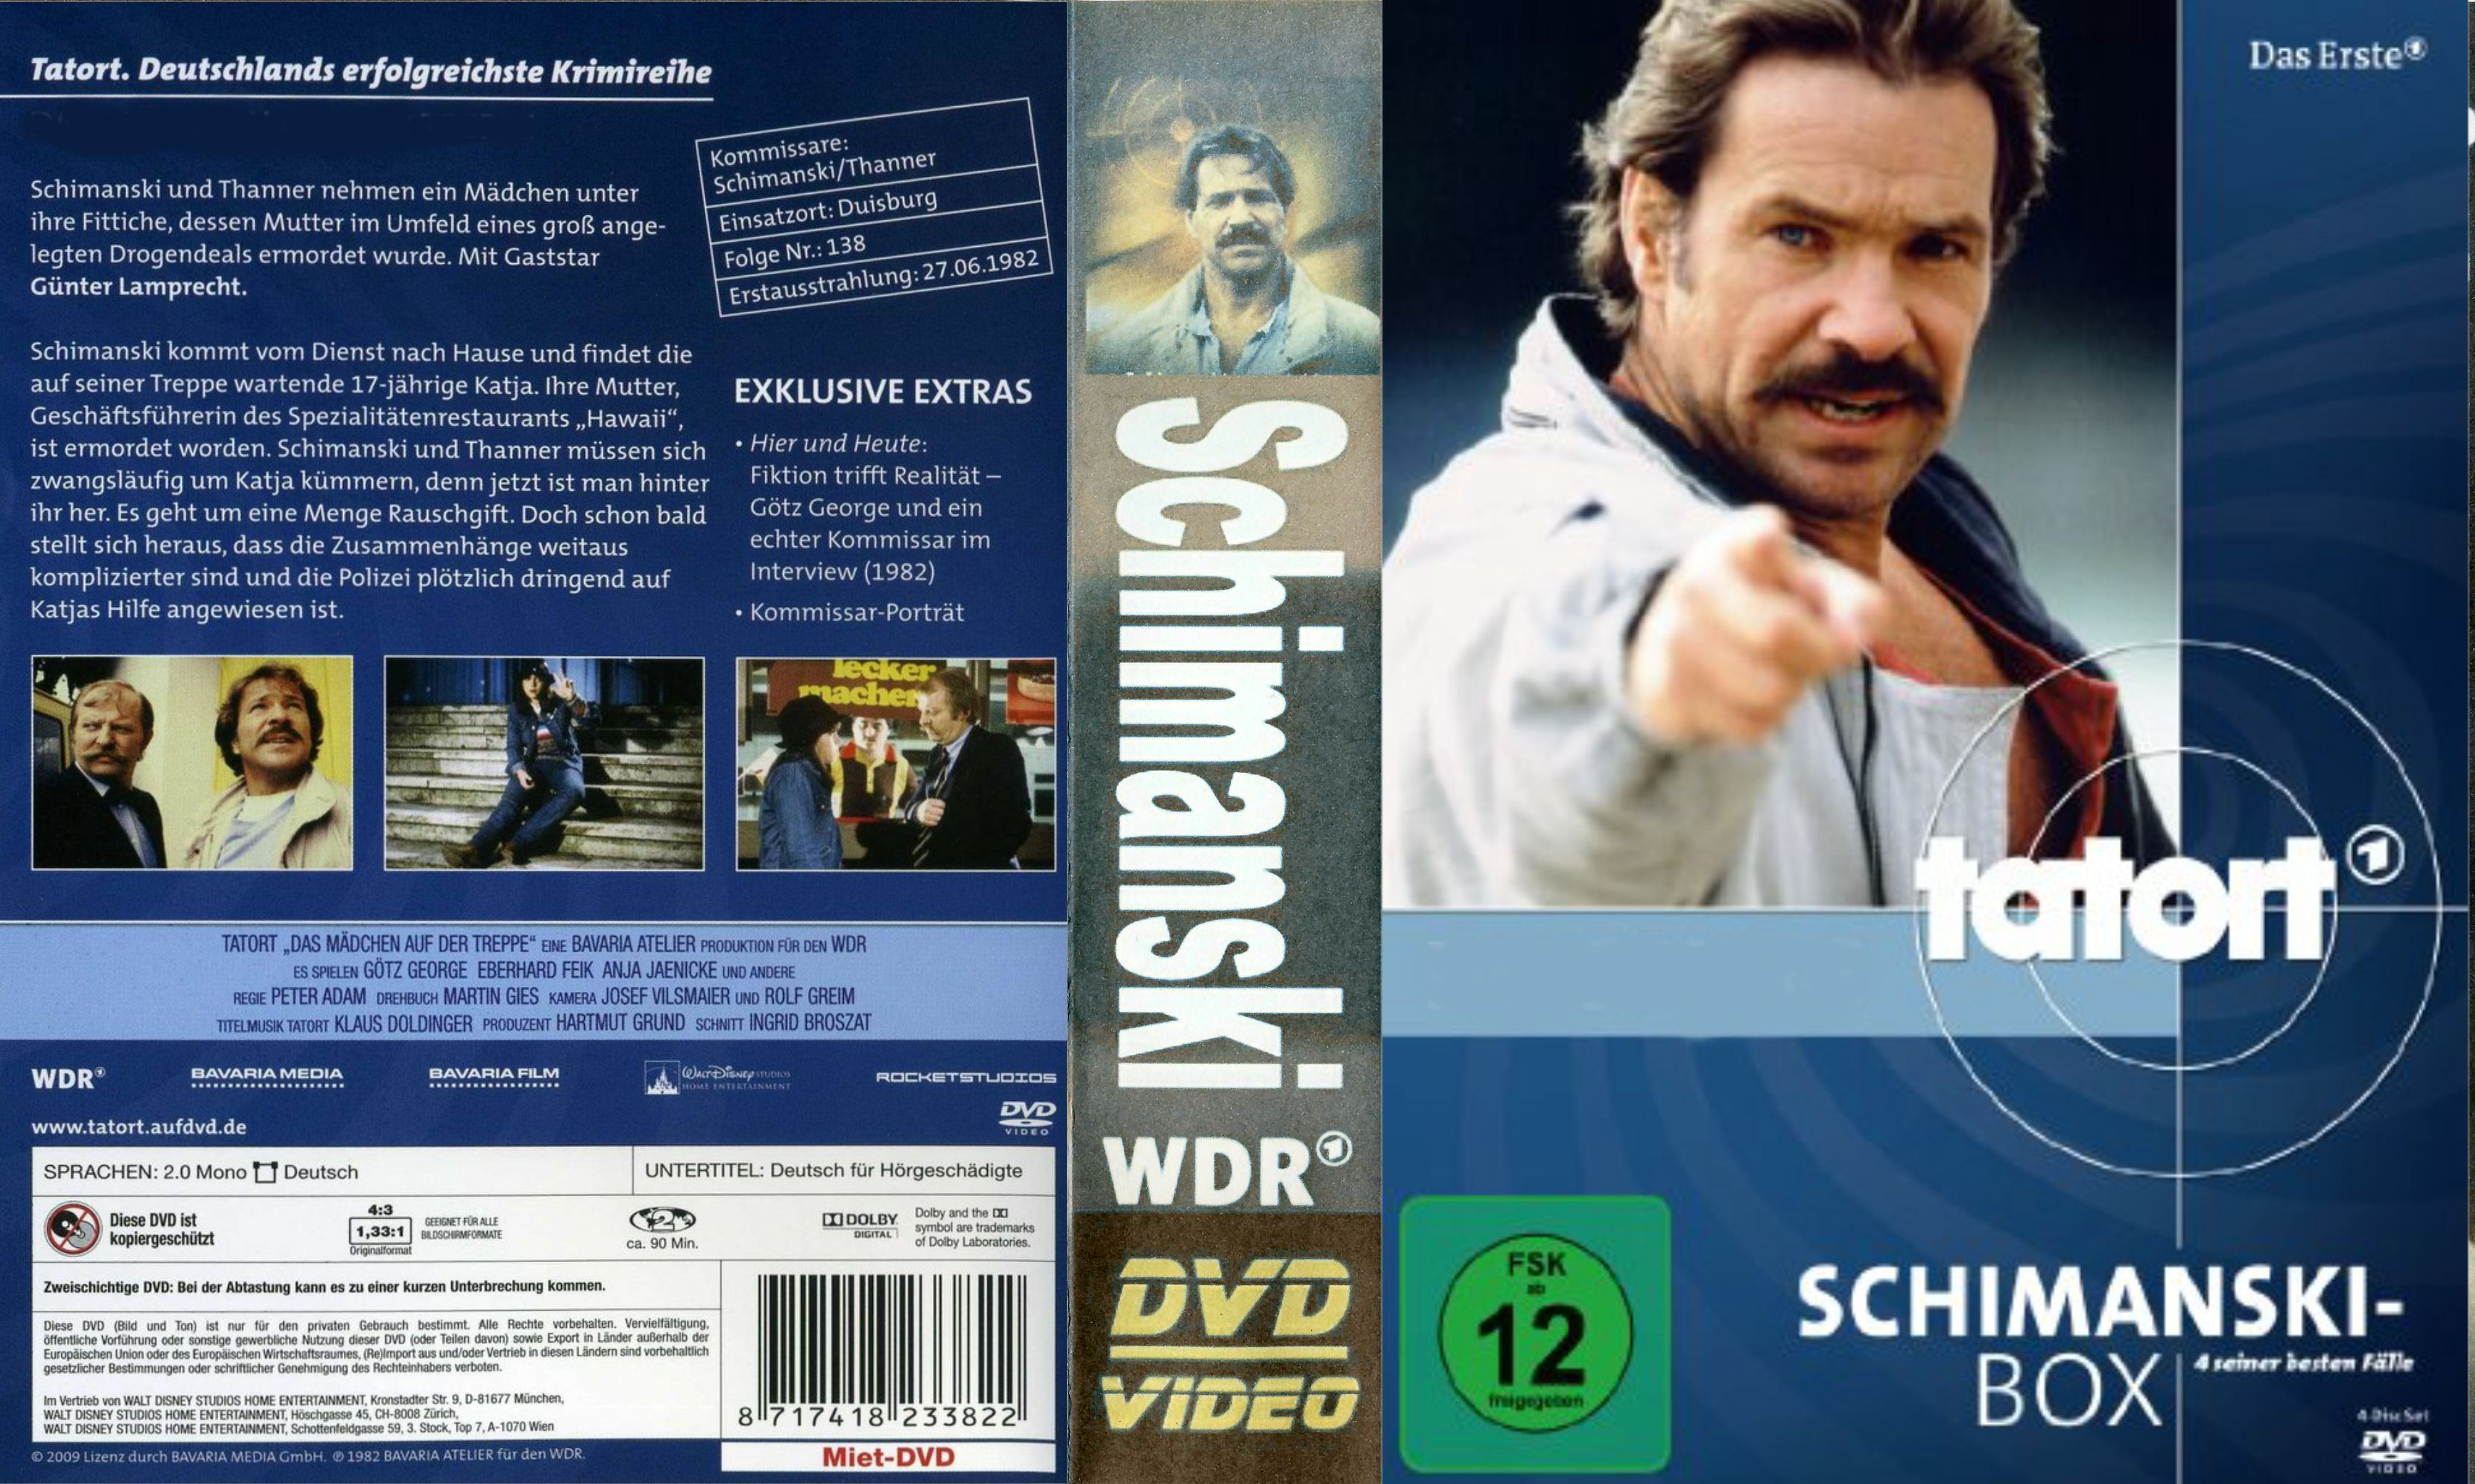 Schimanski Collectie Tatort No Subs - DvD 24